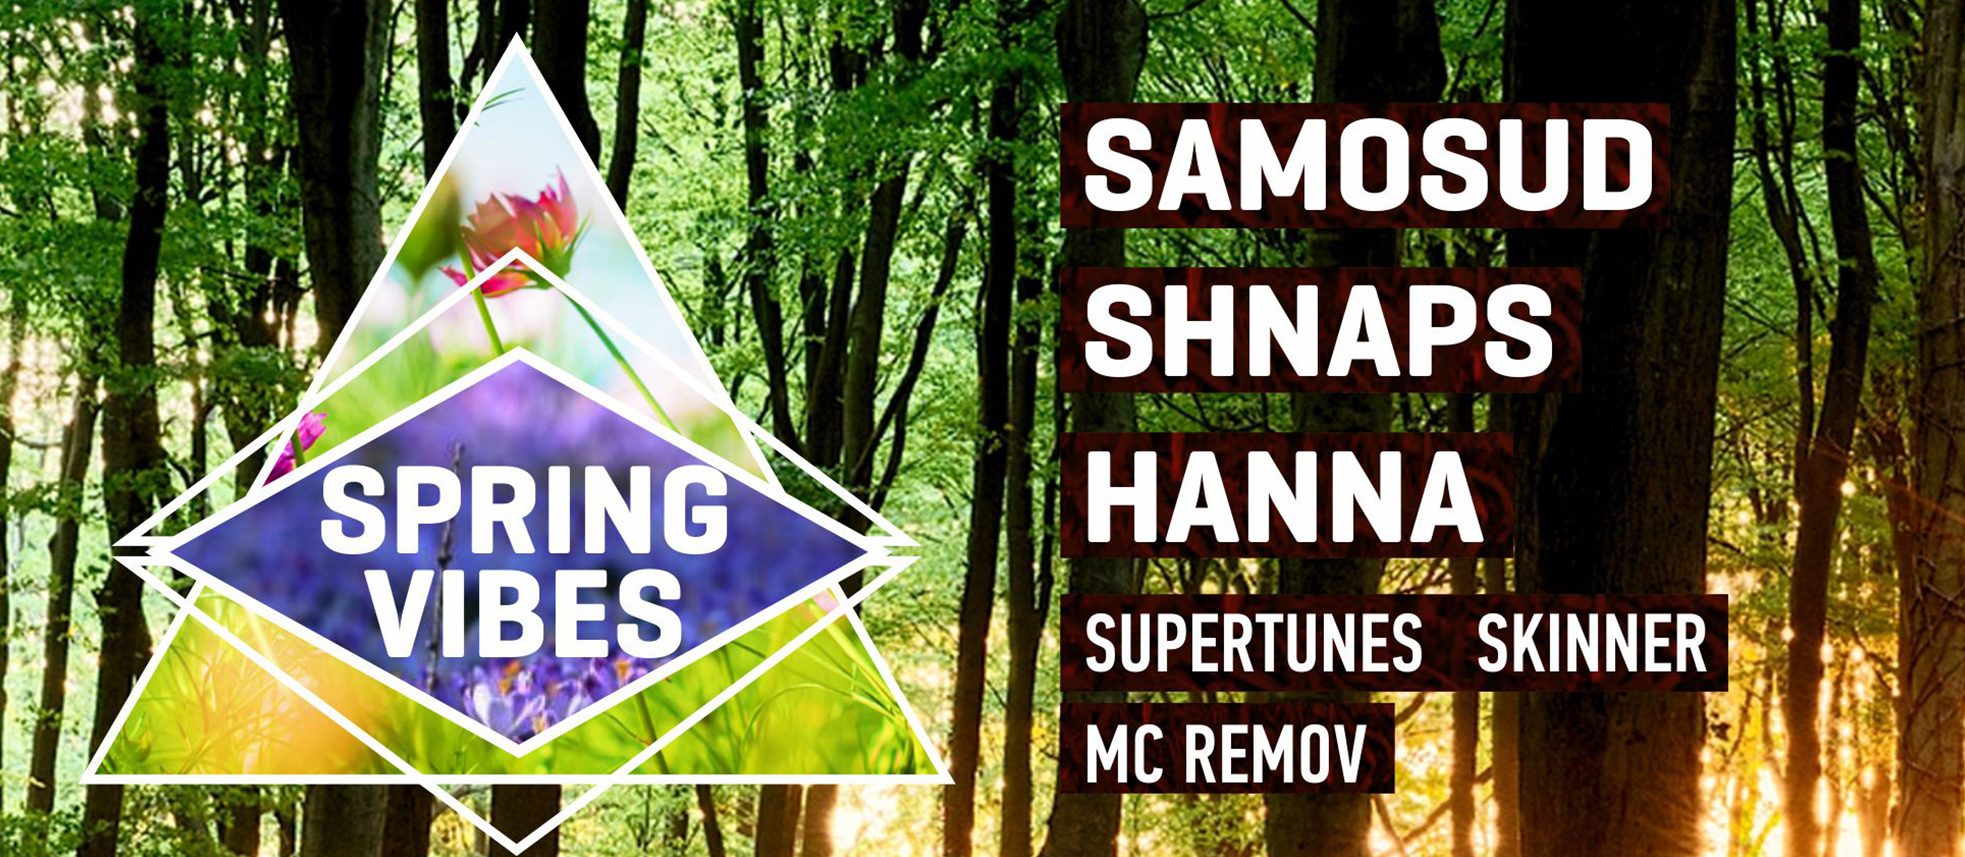 Spring vibes. Samosud, Shnaps, Hanna, SuperTunes, Skinner, Mc Remov